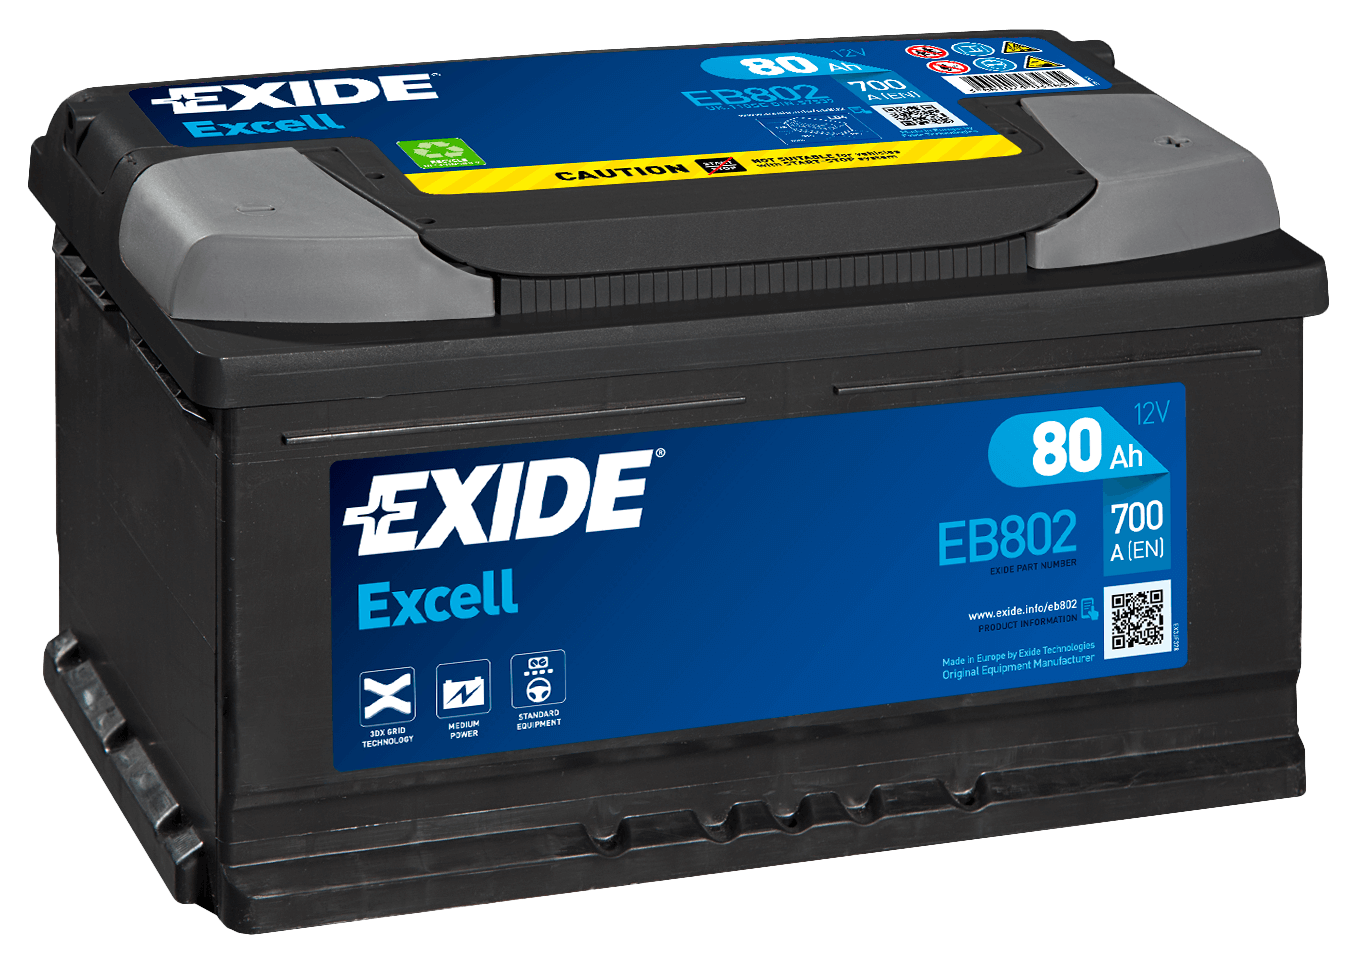 Exide EB454 Excell 12V 45Ah 330A Autobatterie, Starterbatterie, Boot, Batterien für